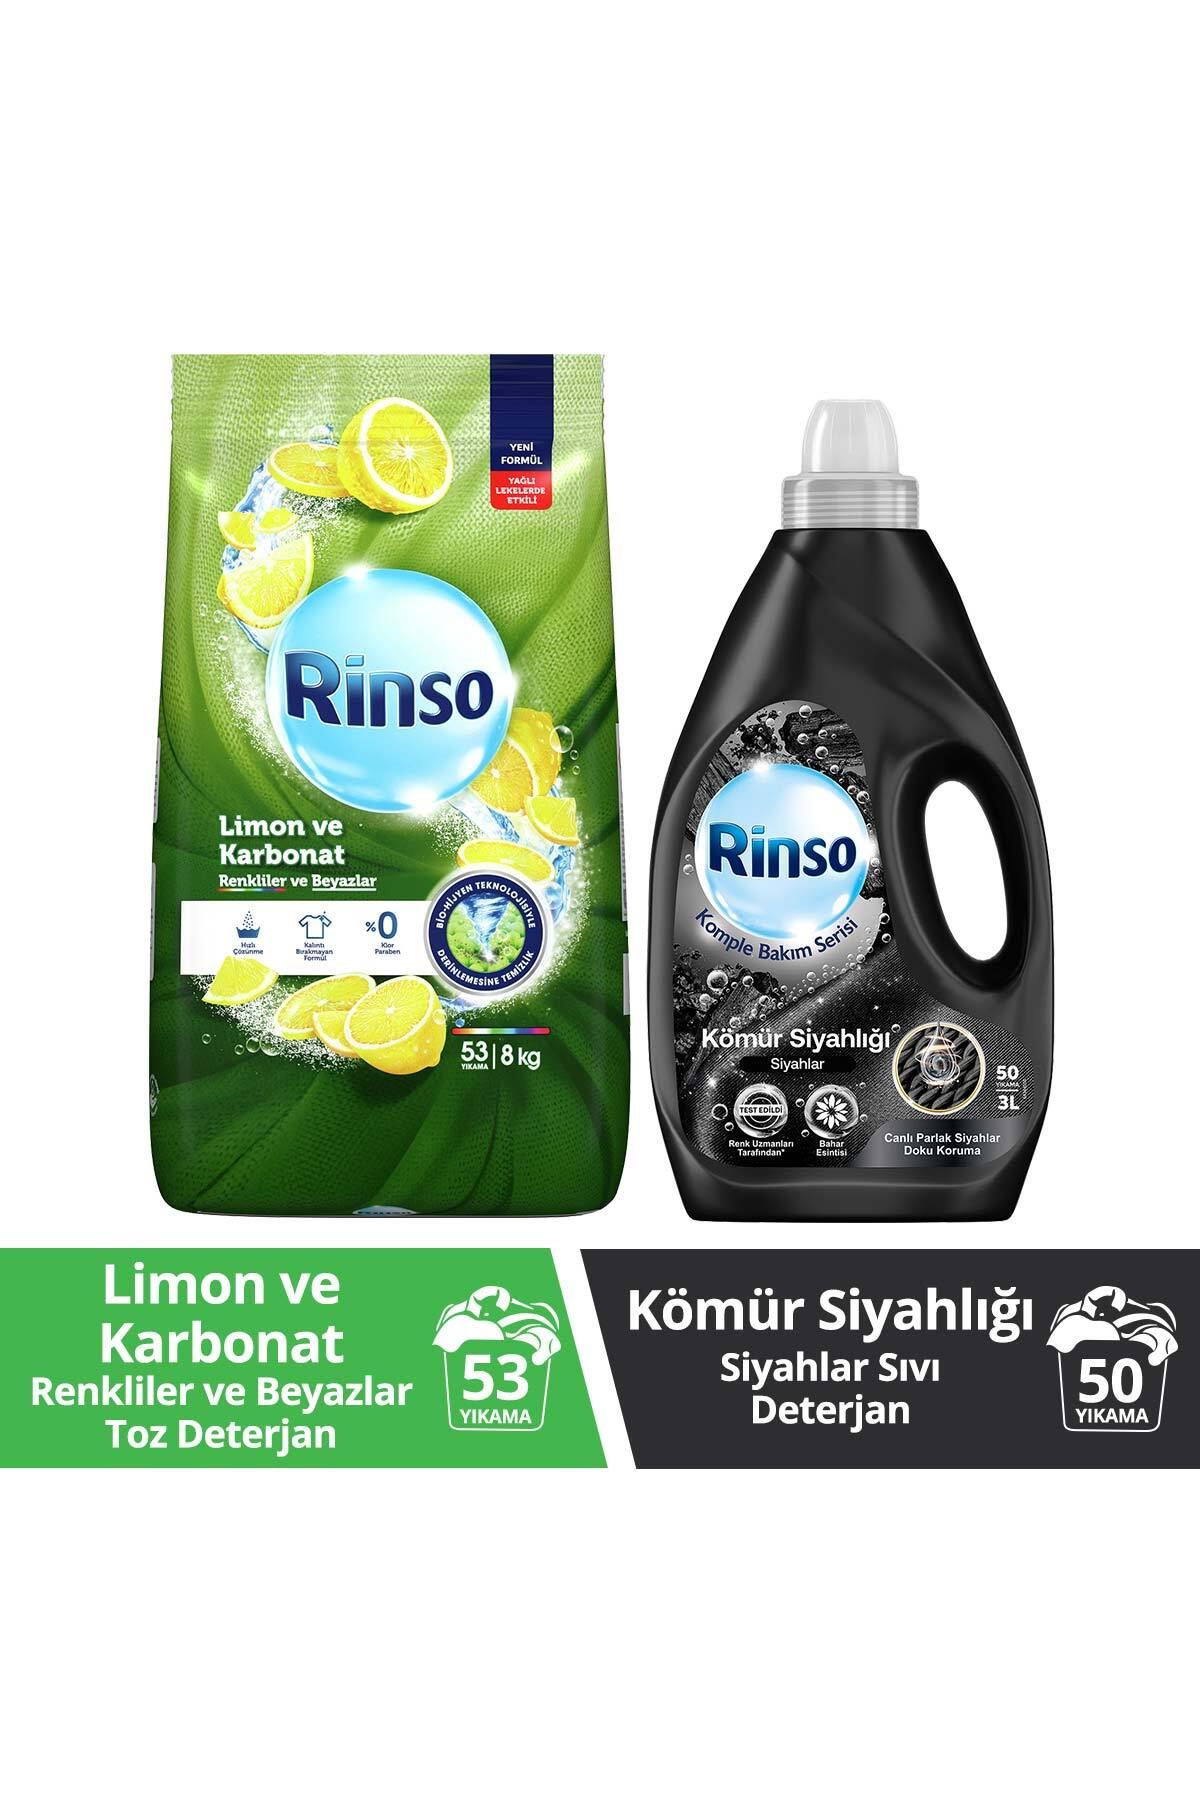 Rinso Sıvı Deterjan Kömür Siyahlığı 3lt 1adet Toz Deterjan Limon Renkli Ve Beyazlar 8kg 1adet